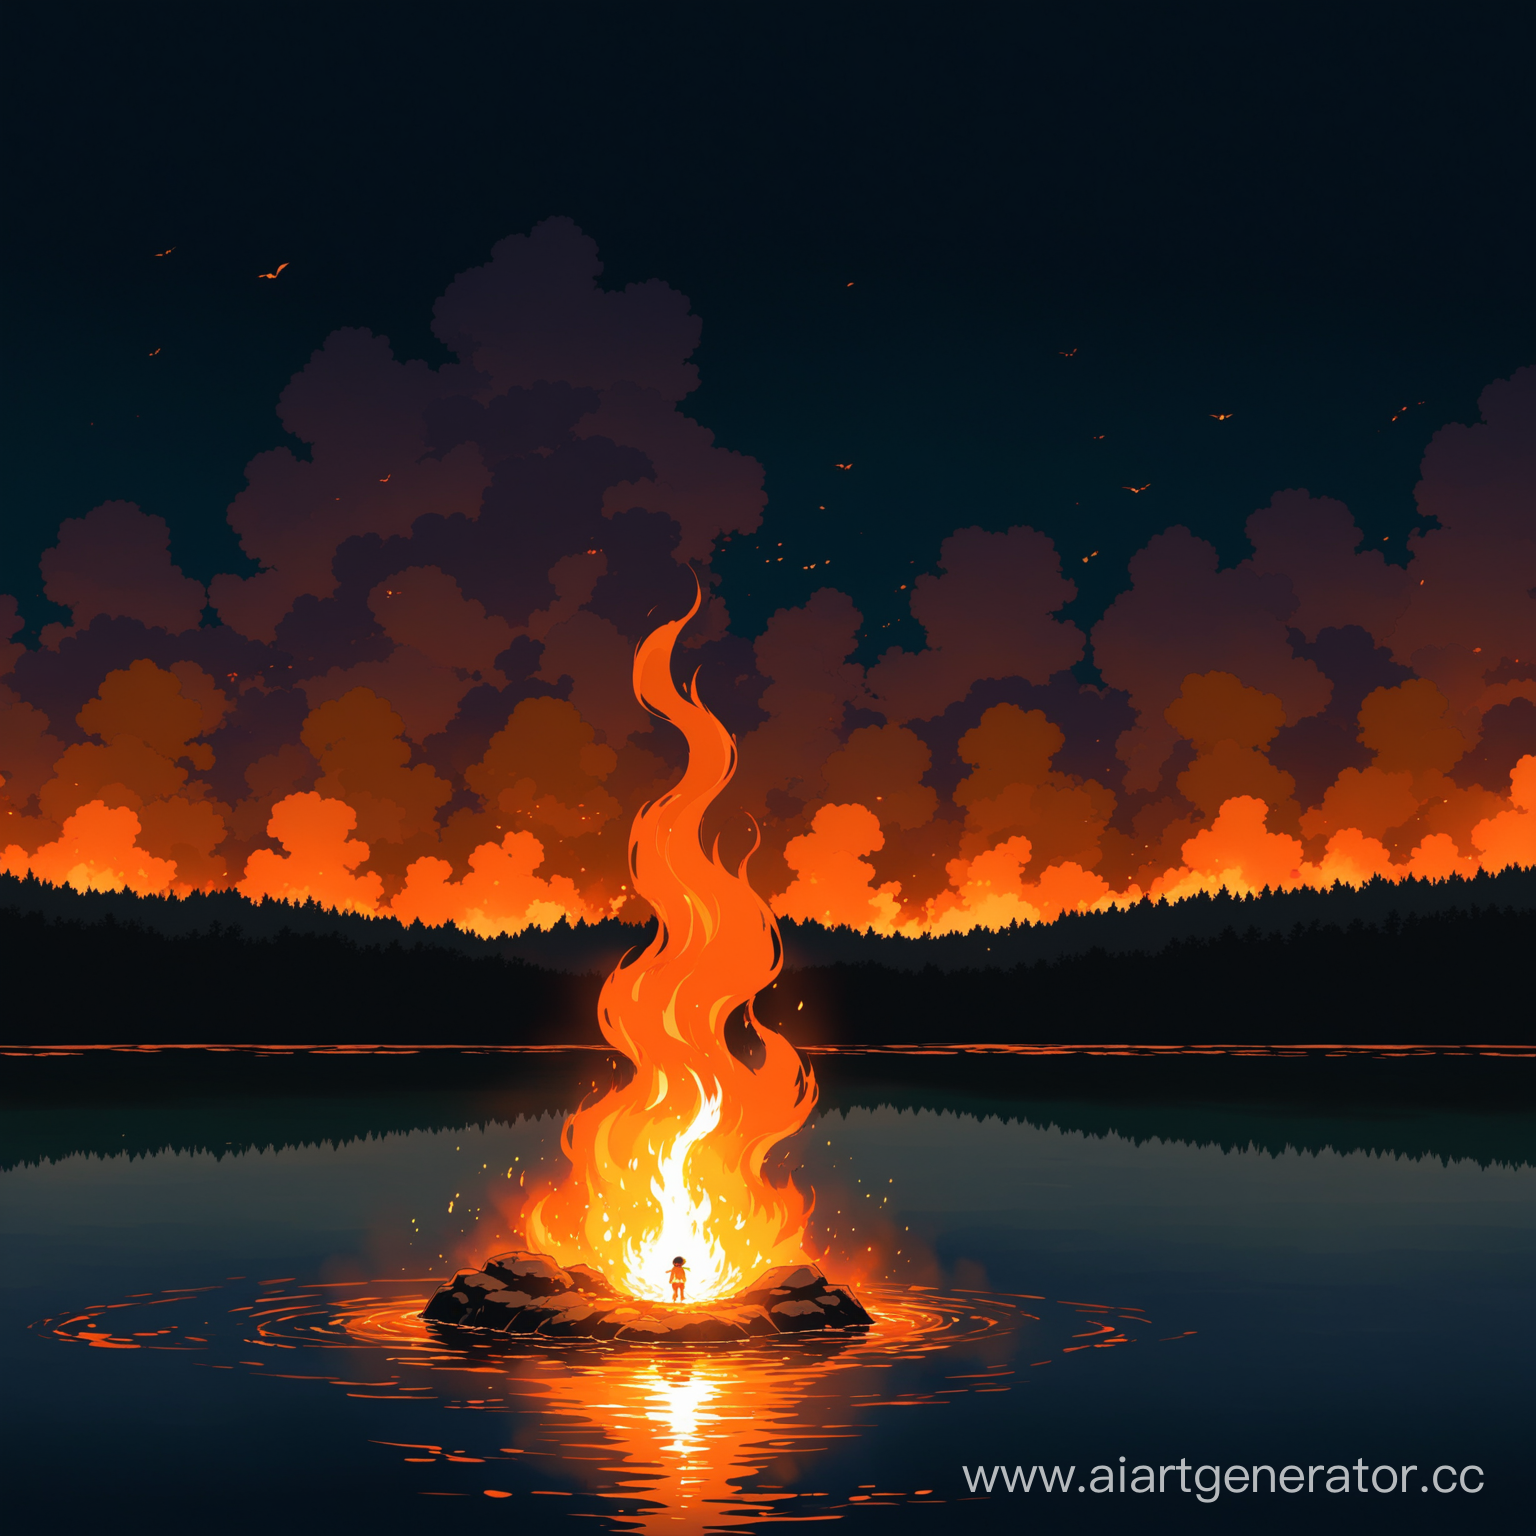 a man burning near a dark lake in the style of the anime Studio Ghibli